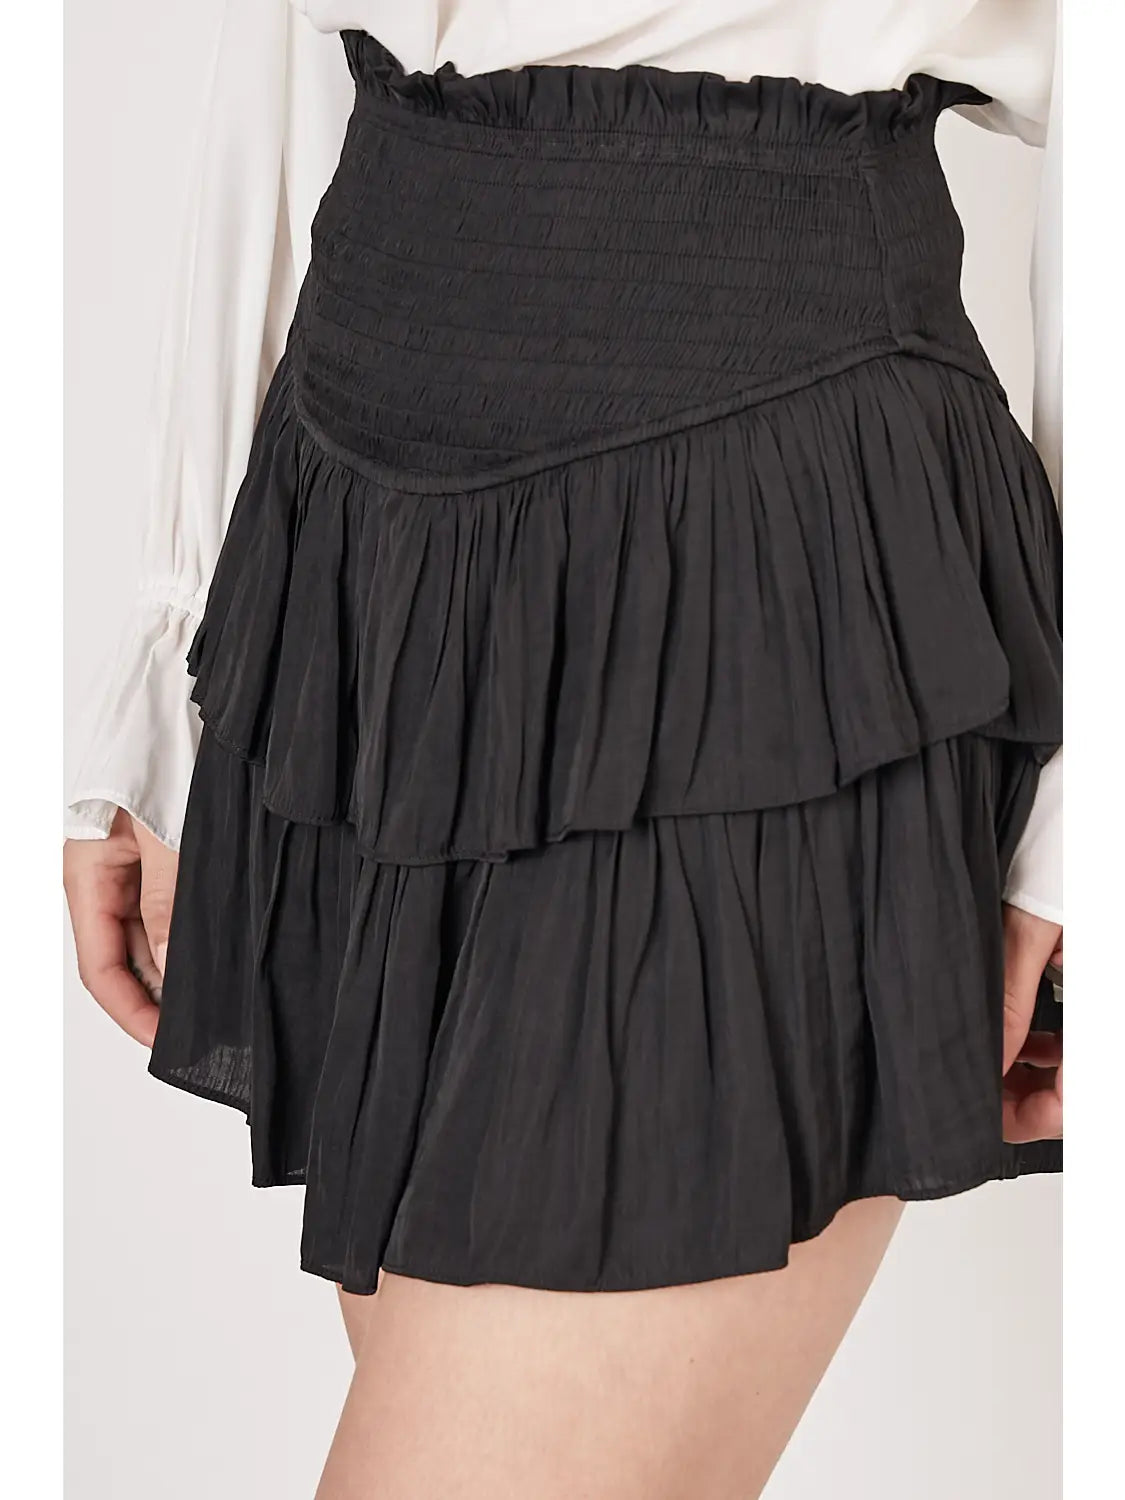 Black Smocked Ruffle Skirt With Shorts - MS